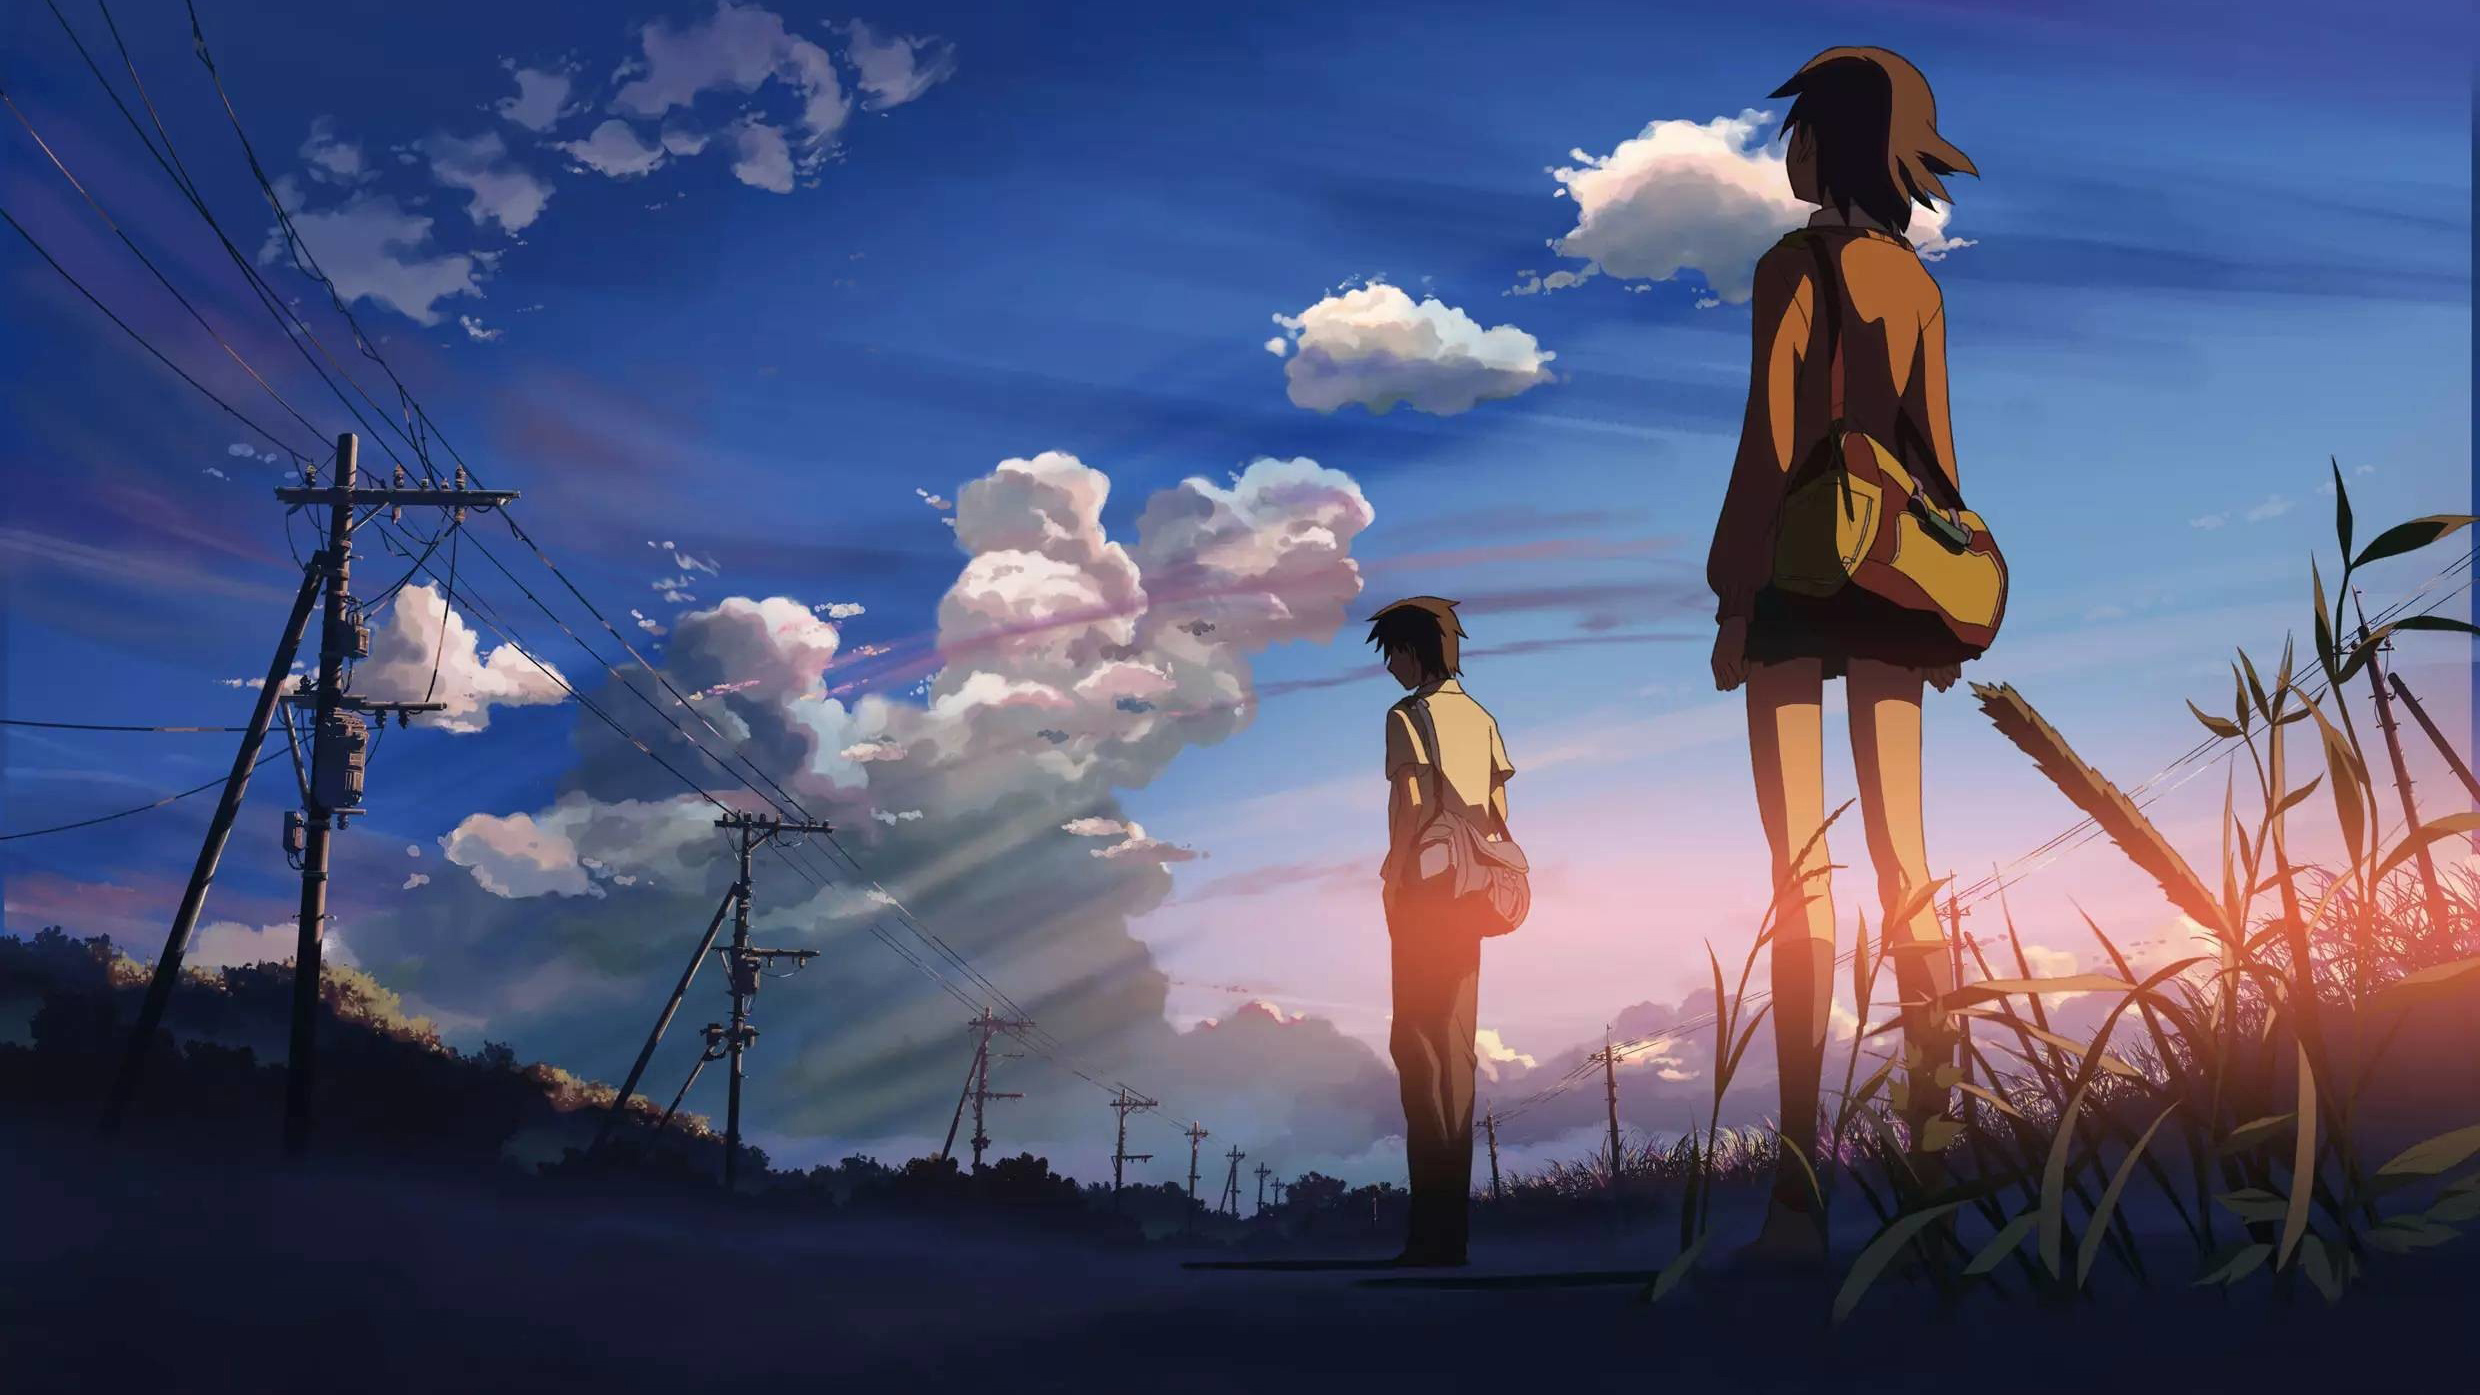 Top 5 Heartbreaking Moments in Anime